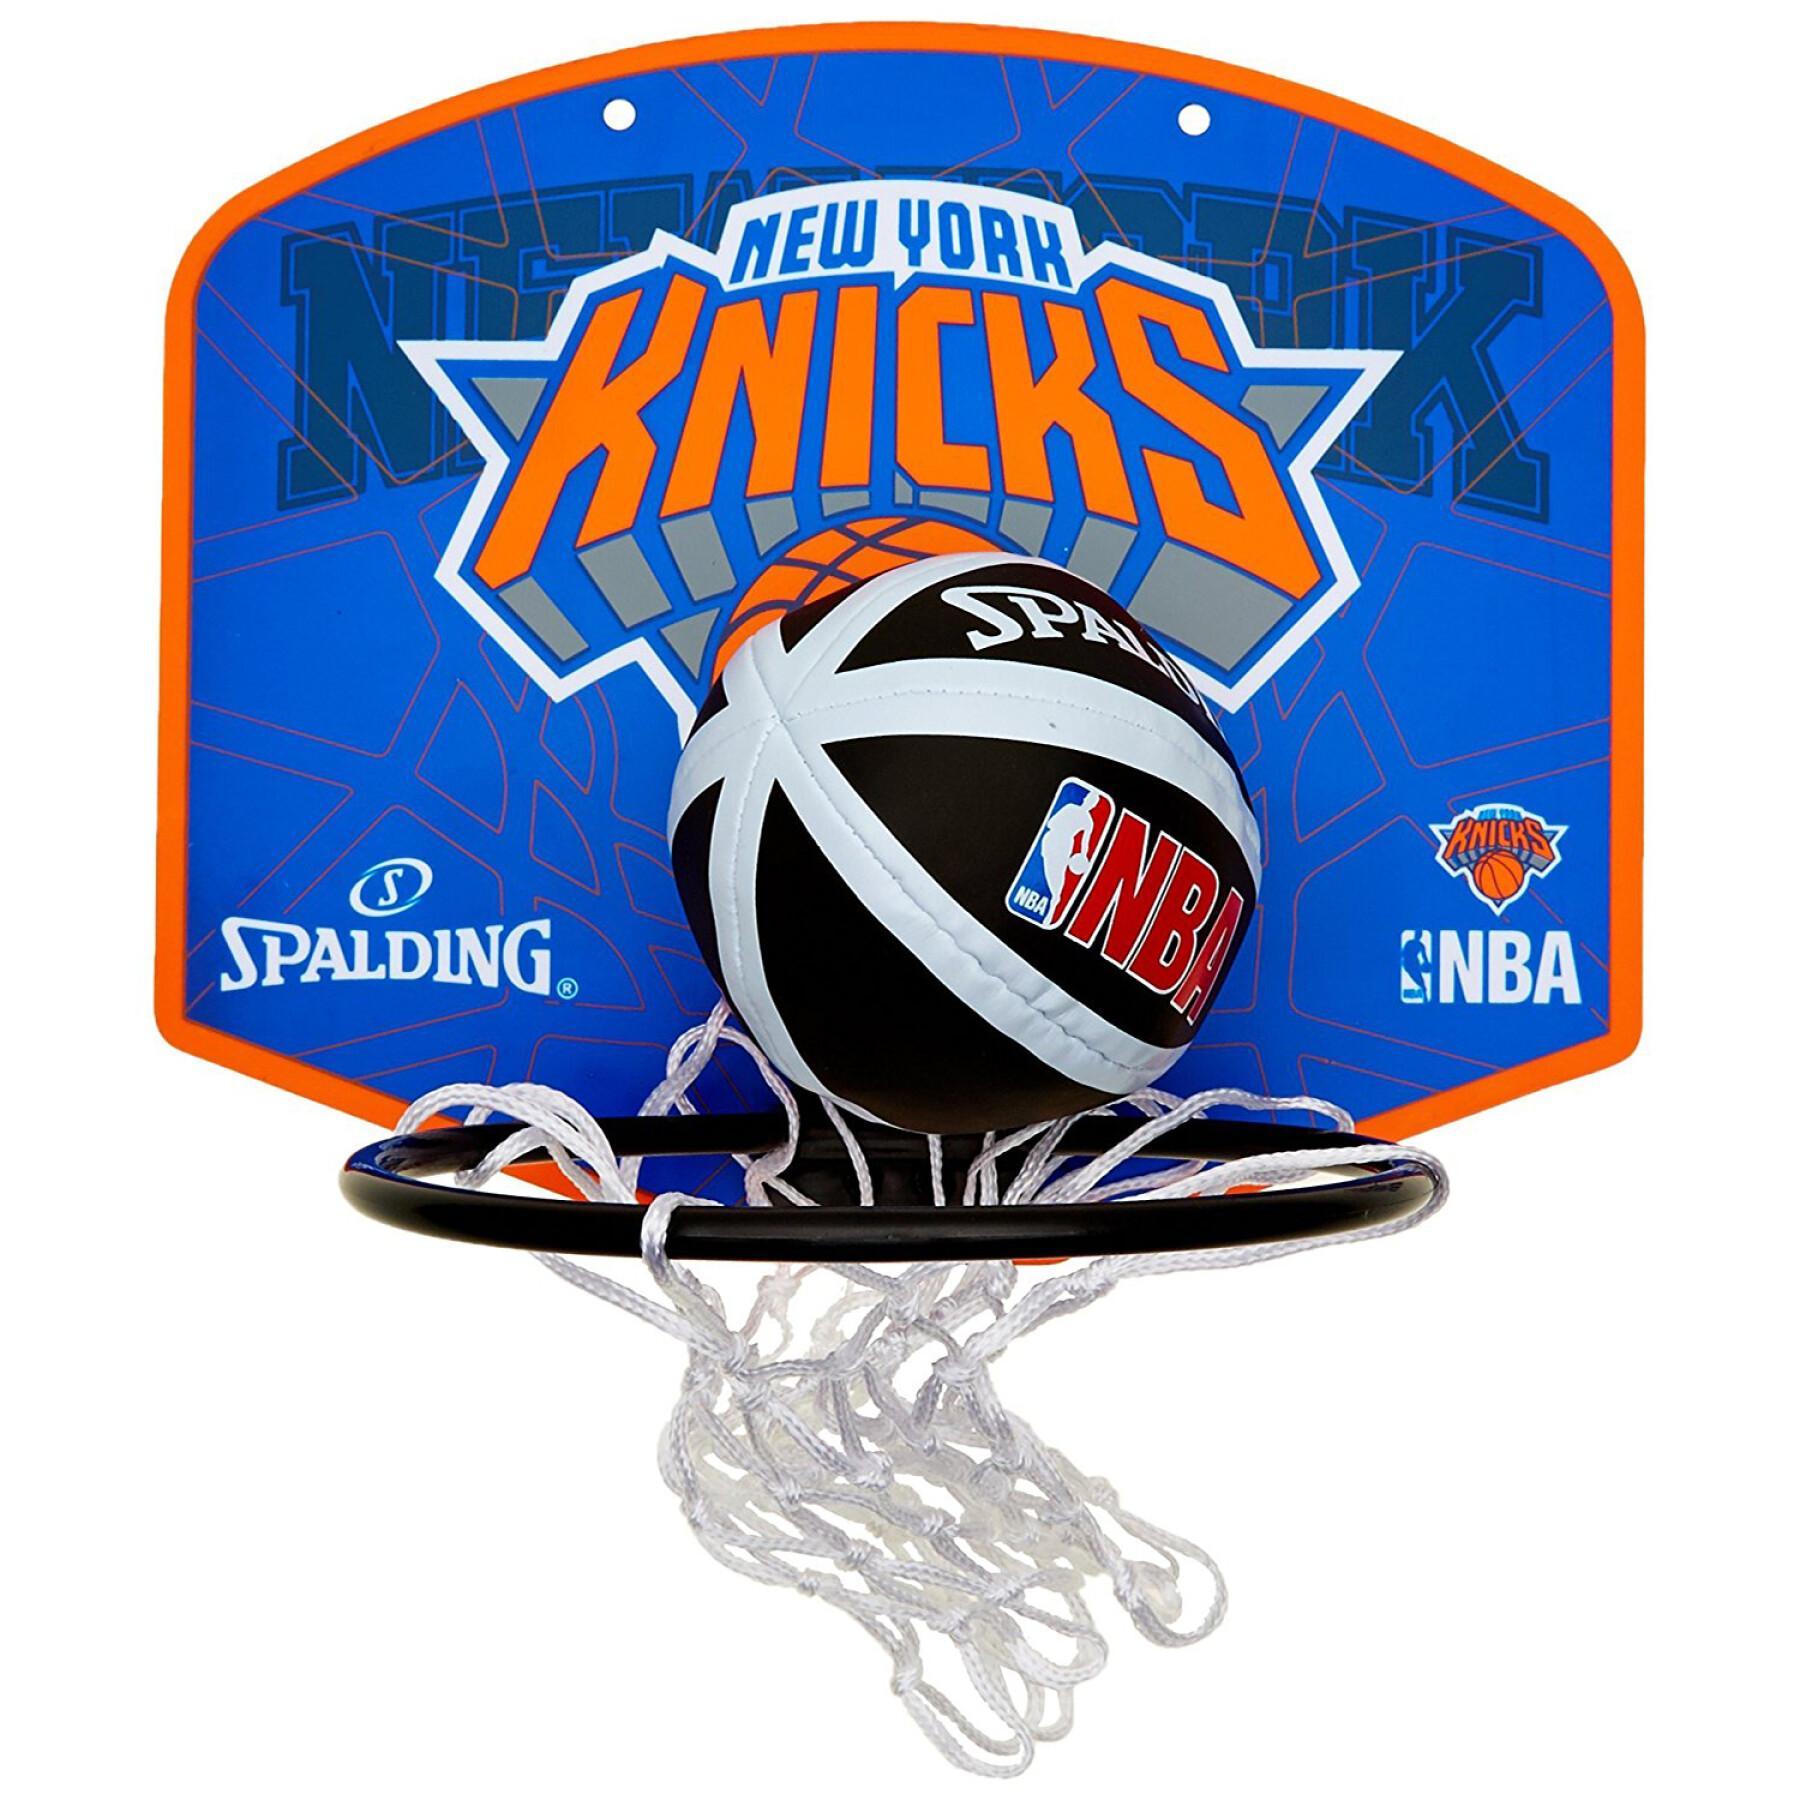 Mini cesta Spalding NBANewYork Knicks